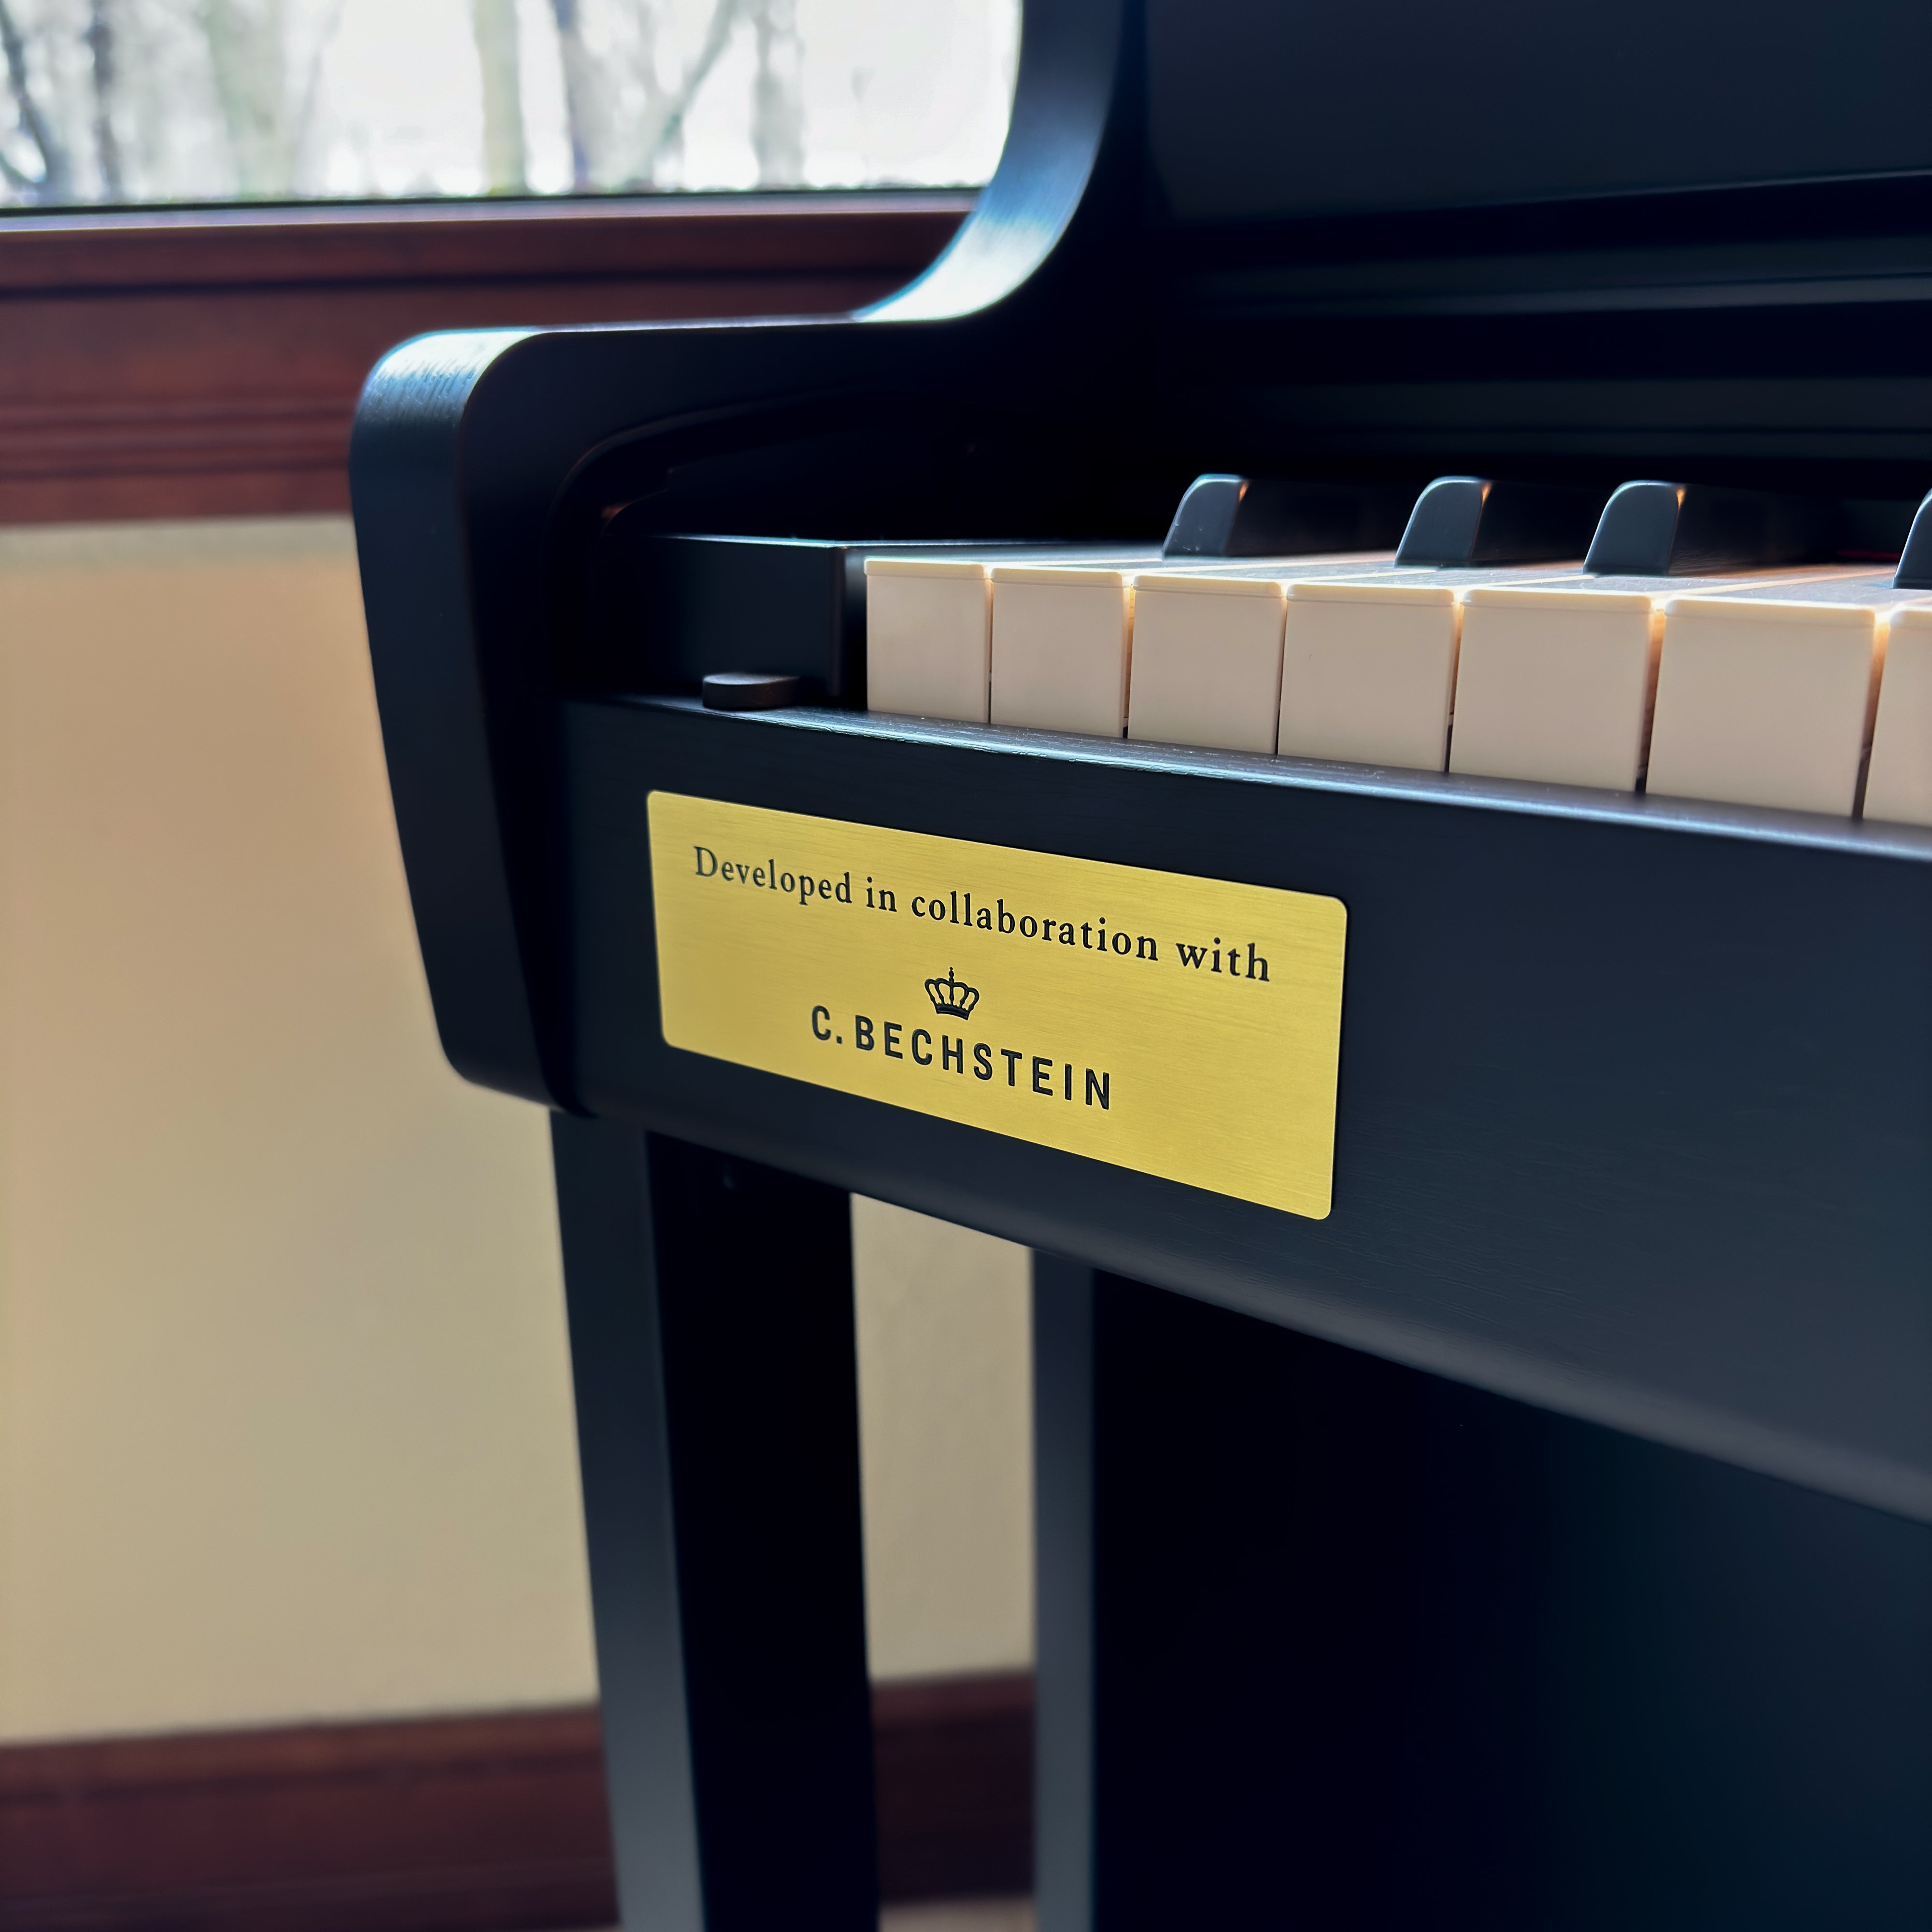 Casio Celviano AP-750 Digital Piano - Black - View 18